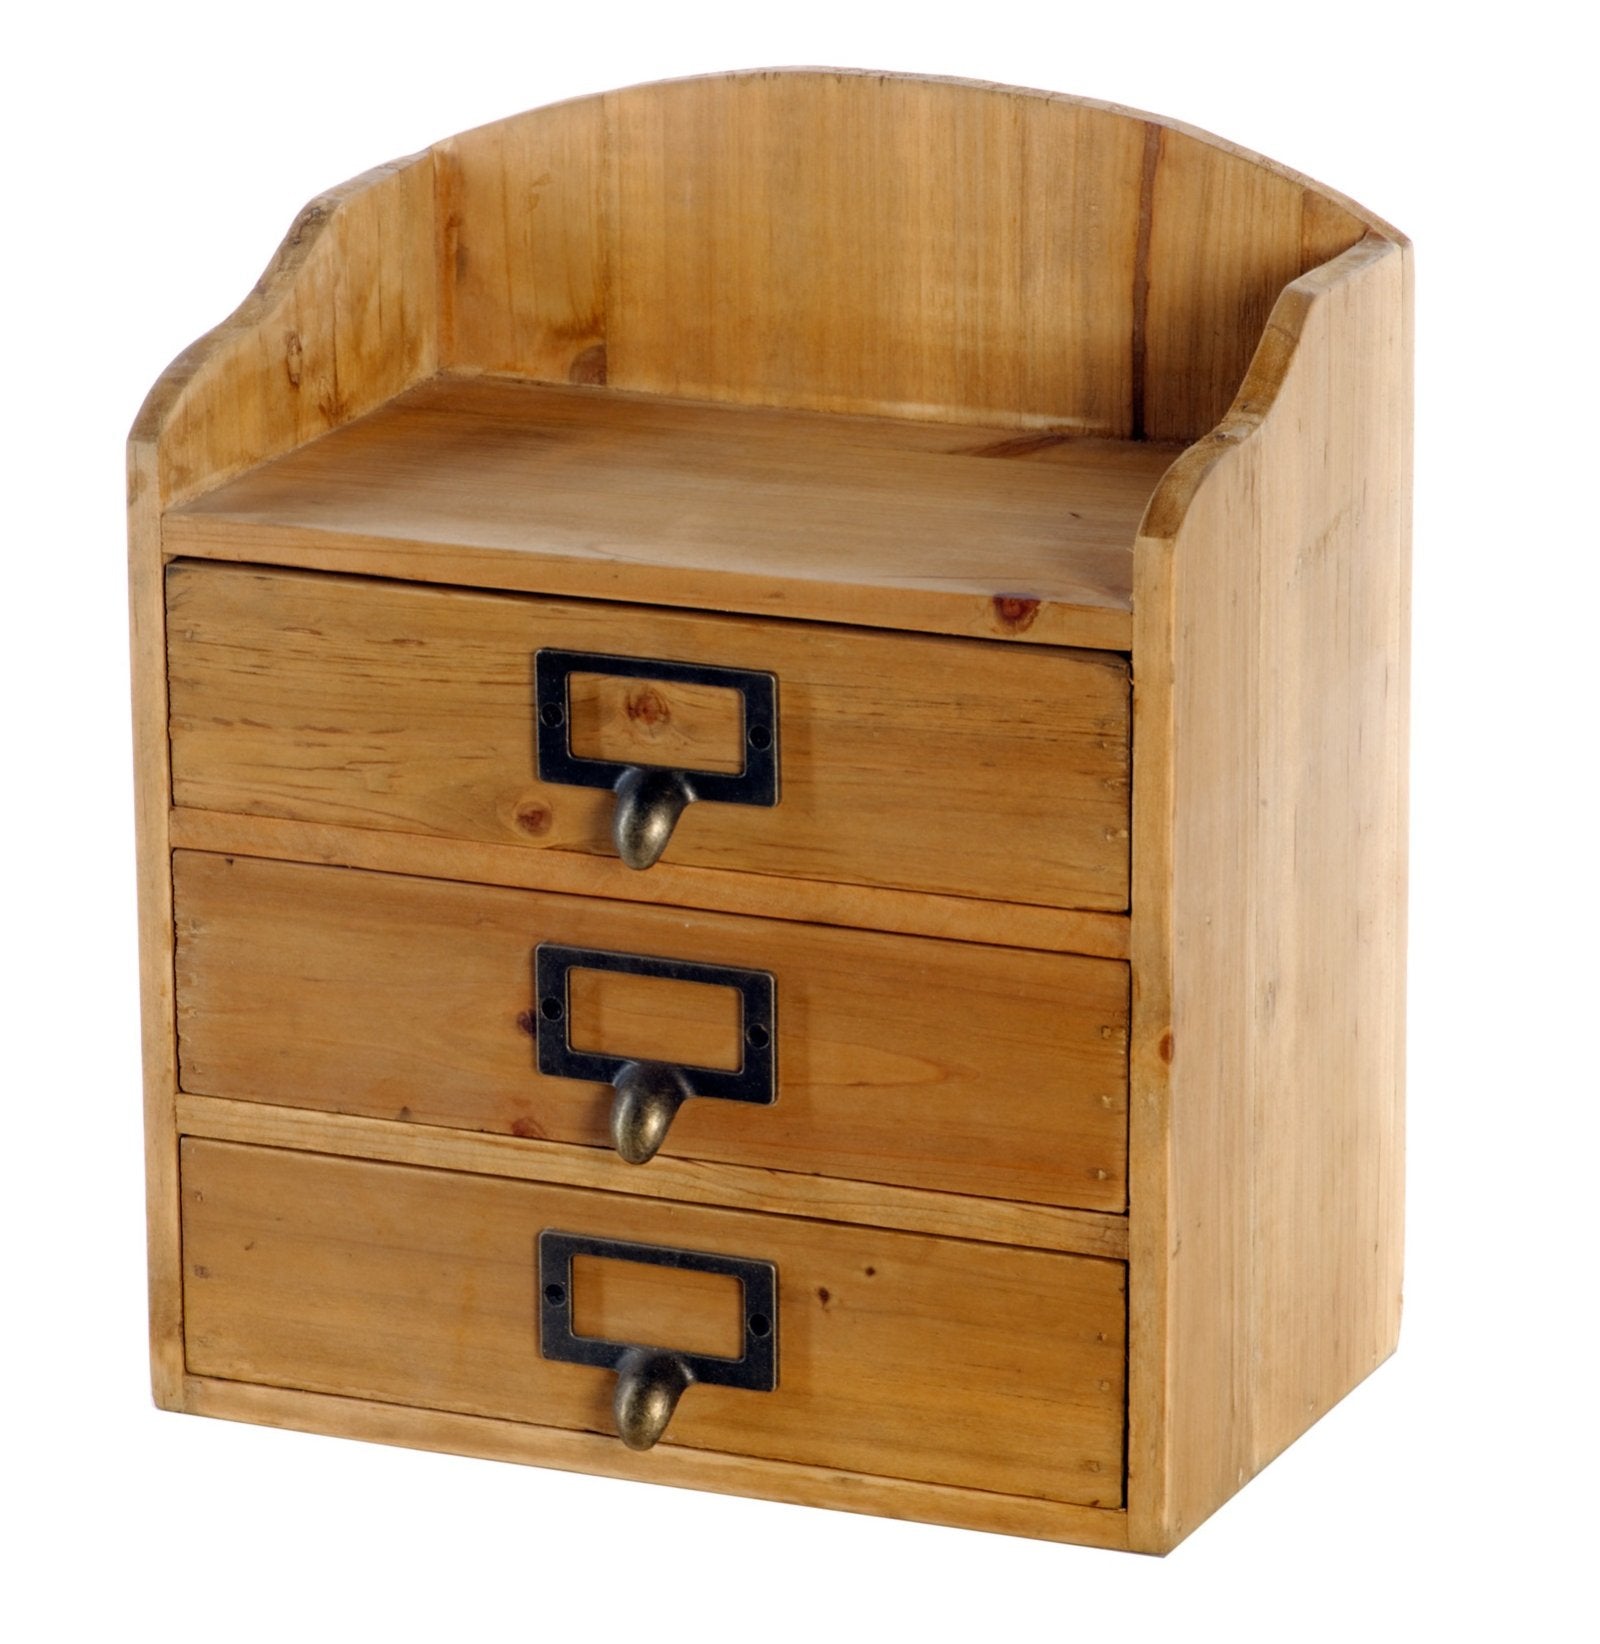 Image of 3 Drawers Rustic Wood Storage Organizer